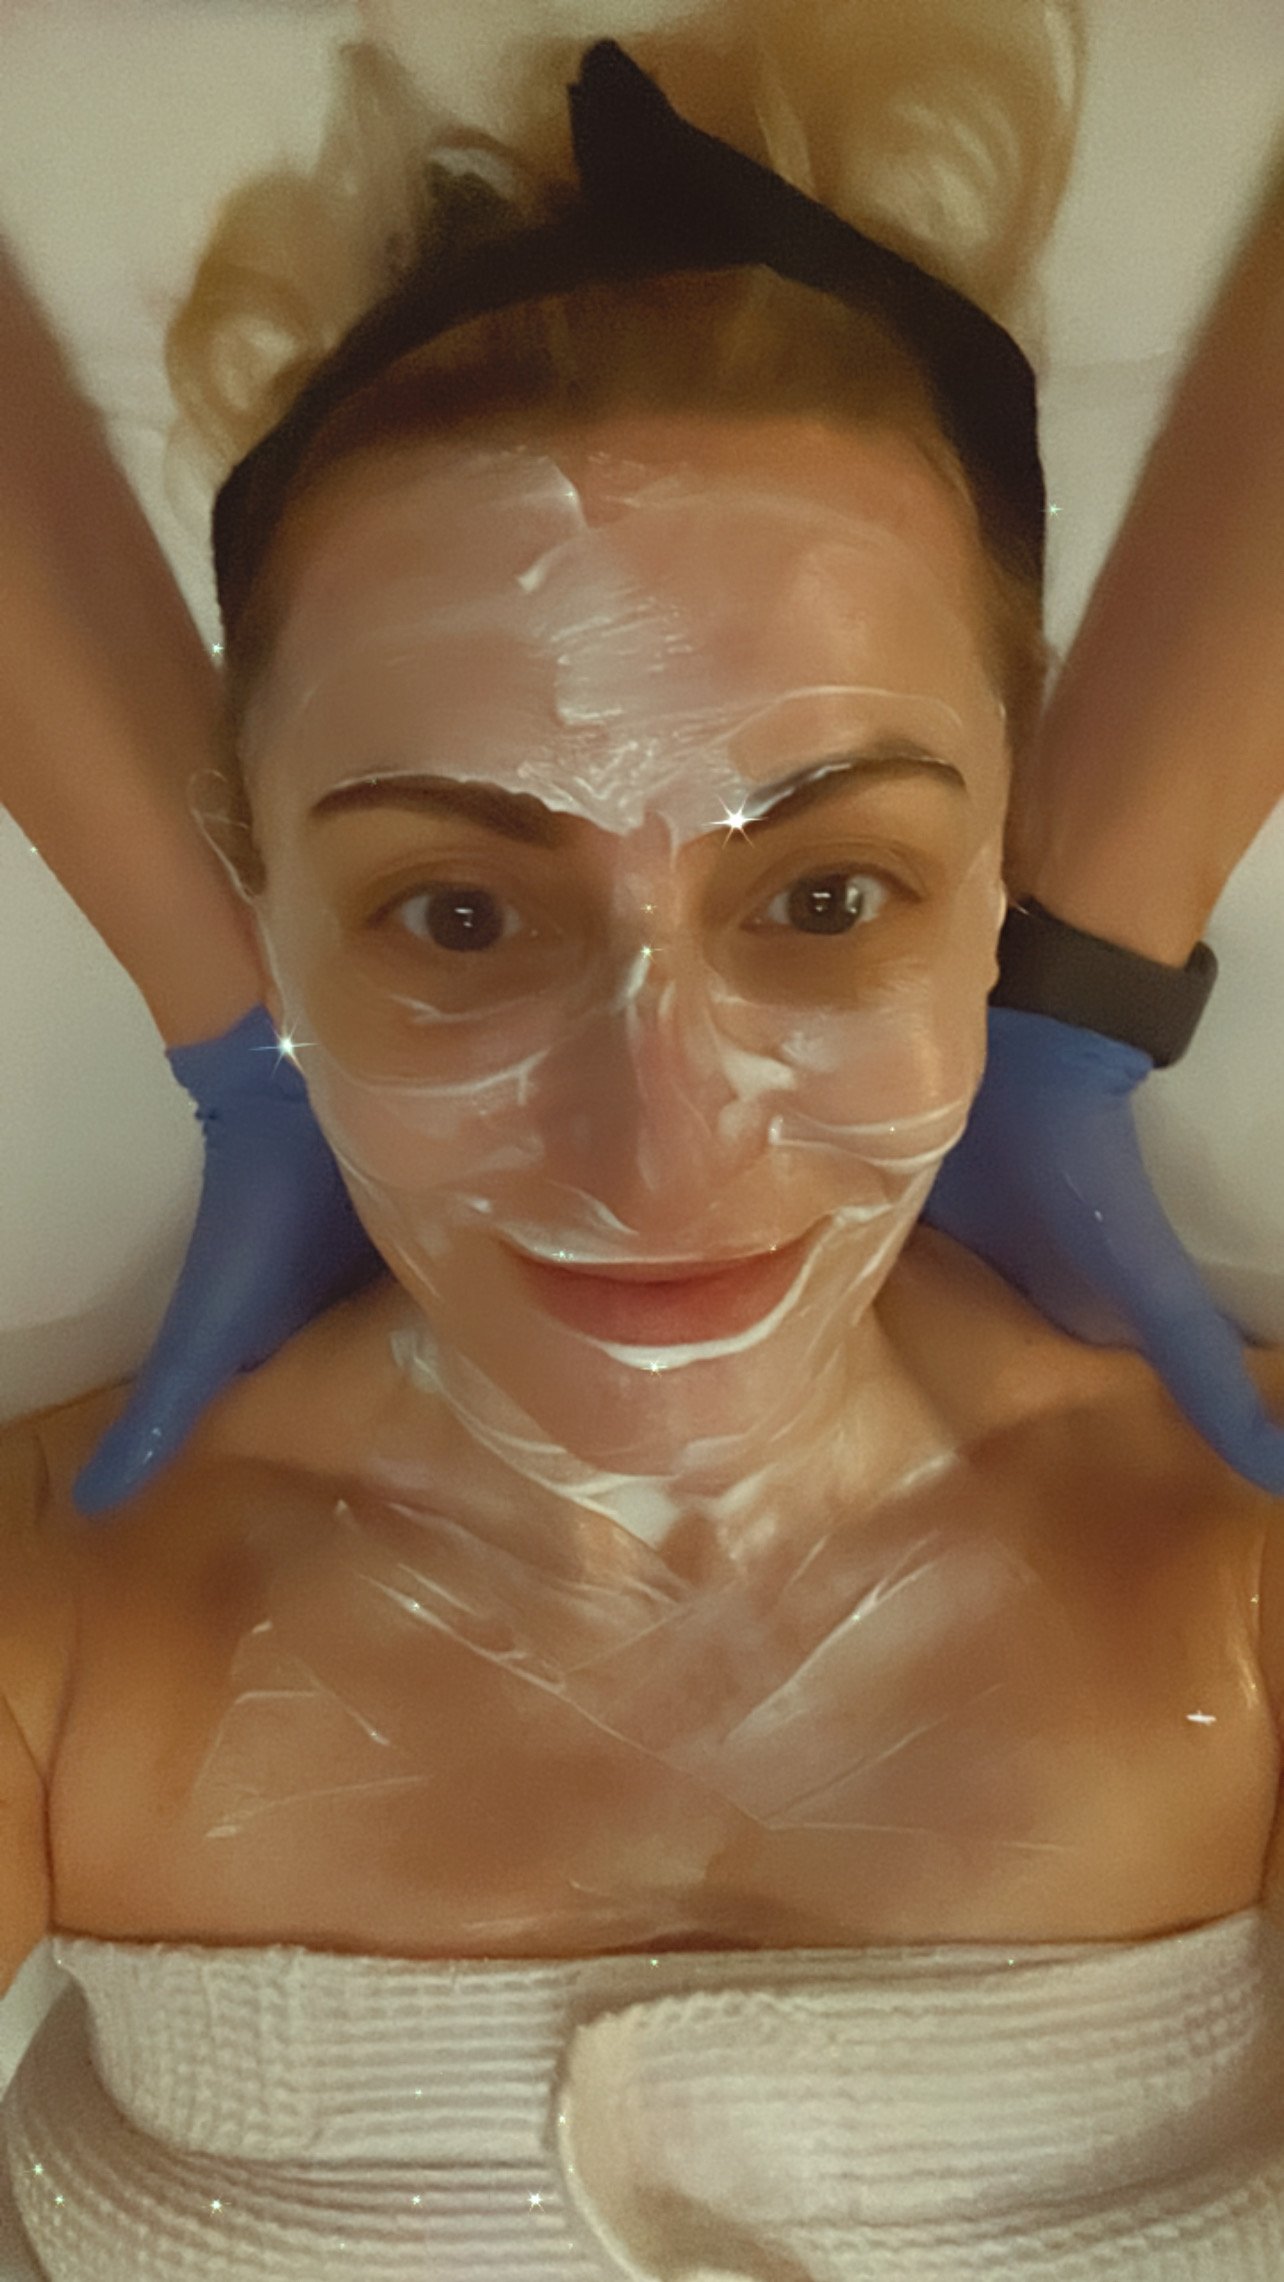 woman getting a facial treatment